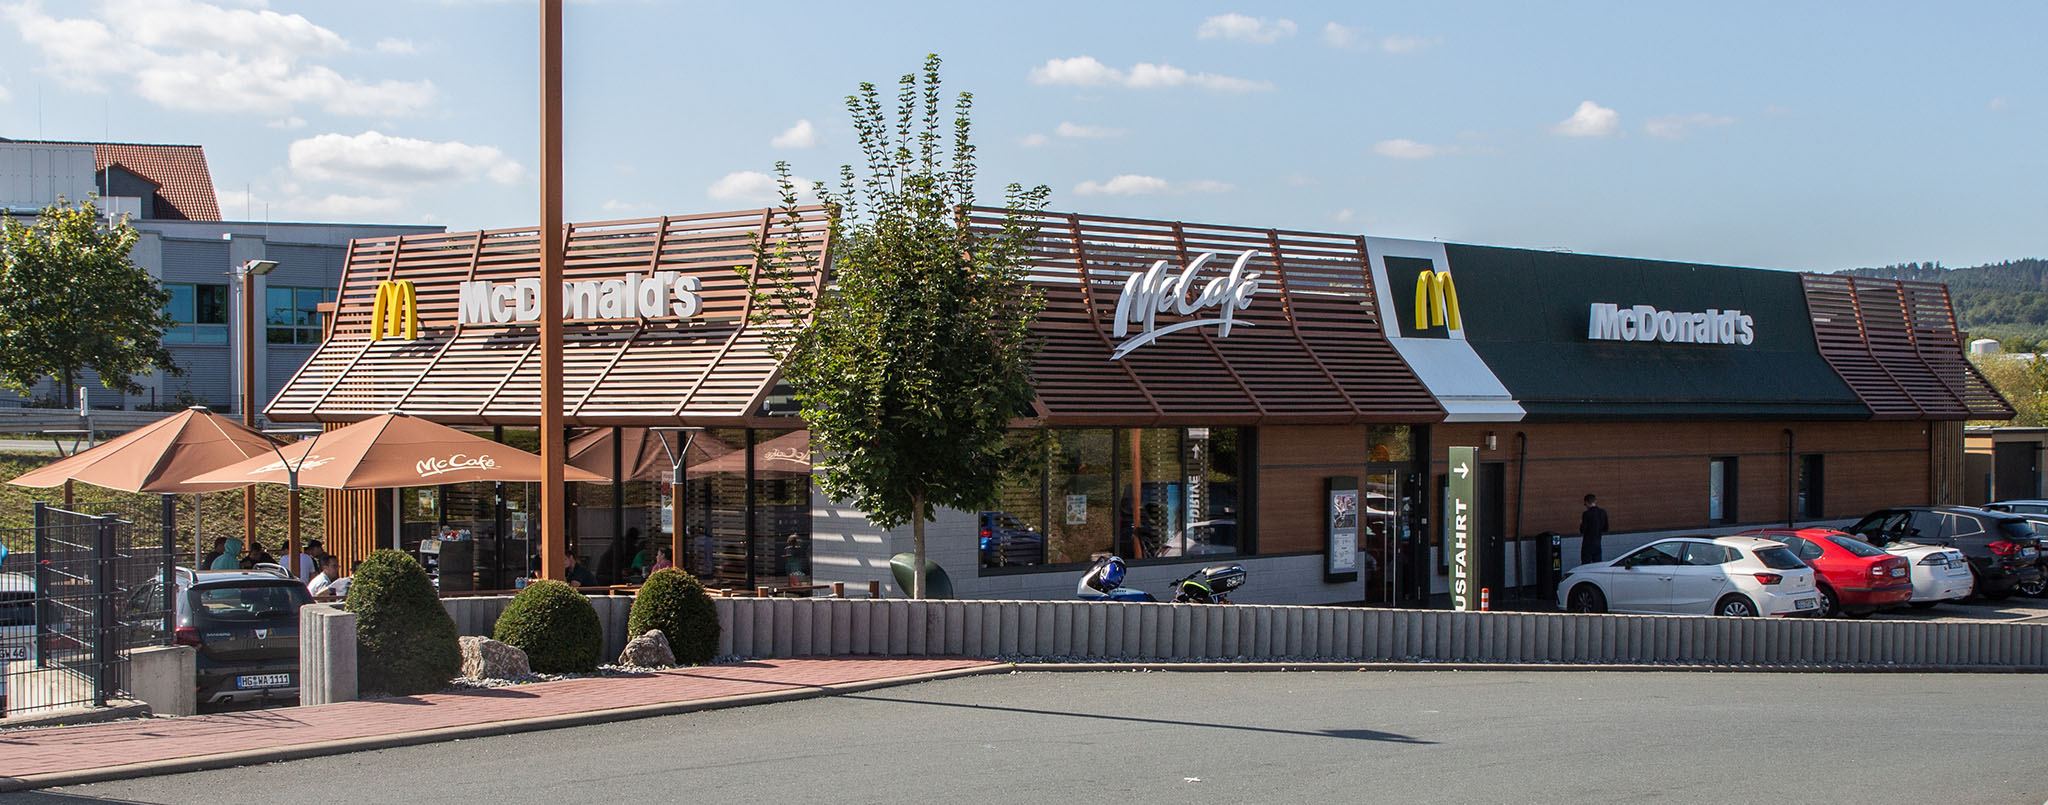 Das McDonald’s-Restaurant in Neu-Anspach